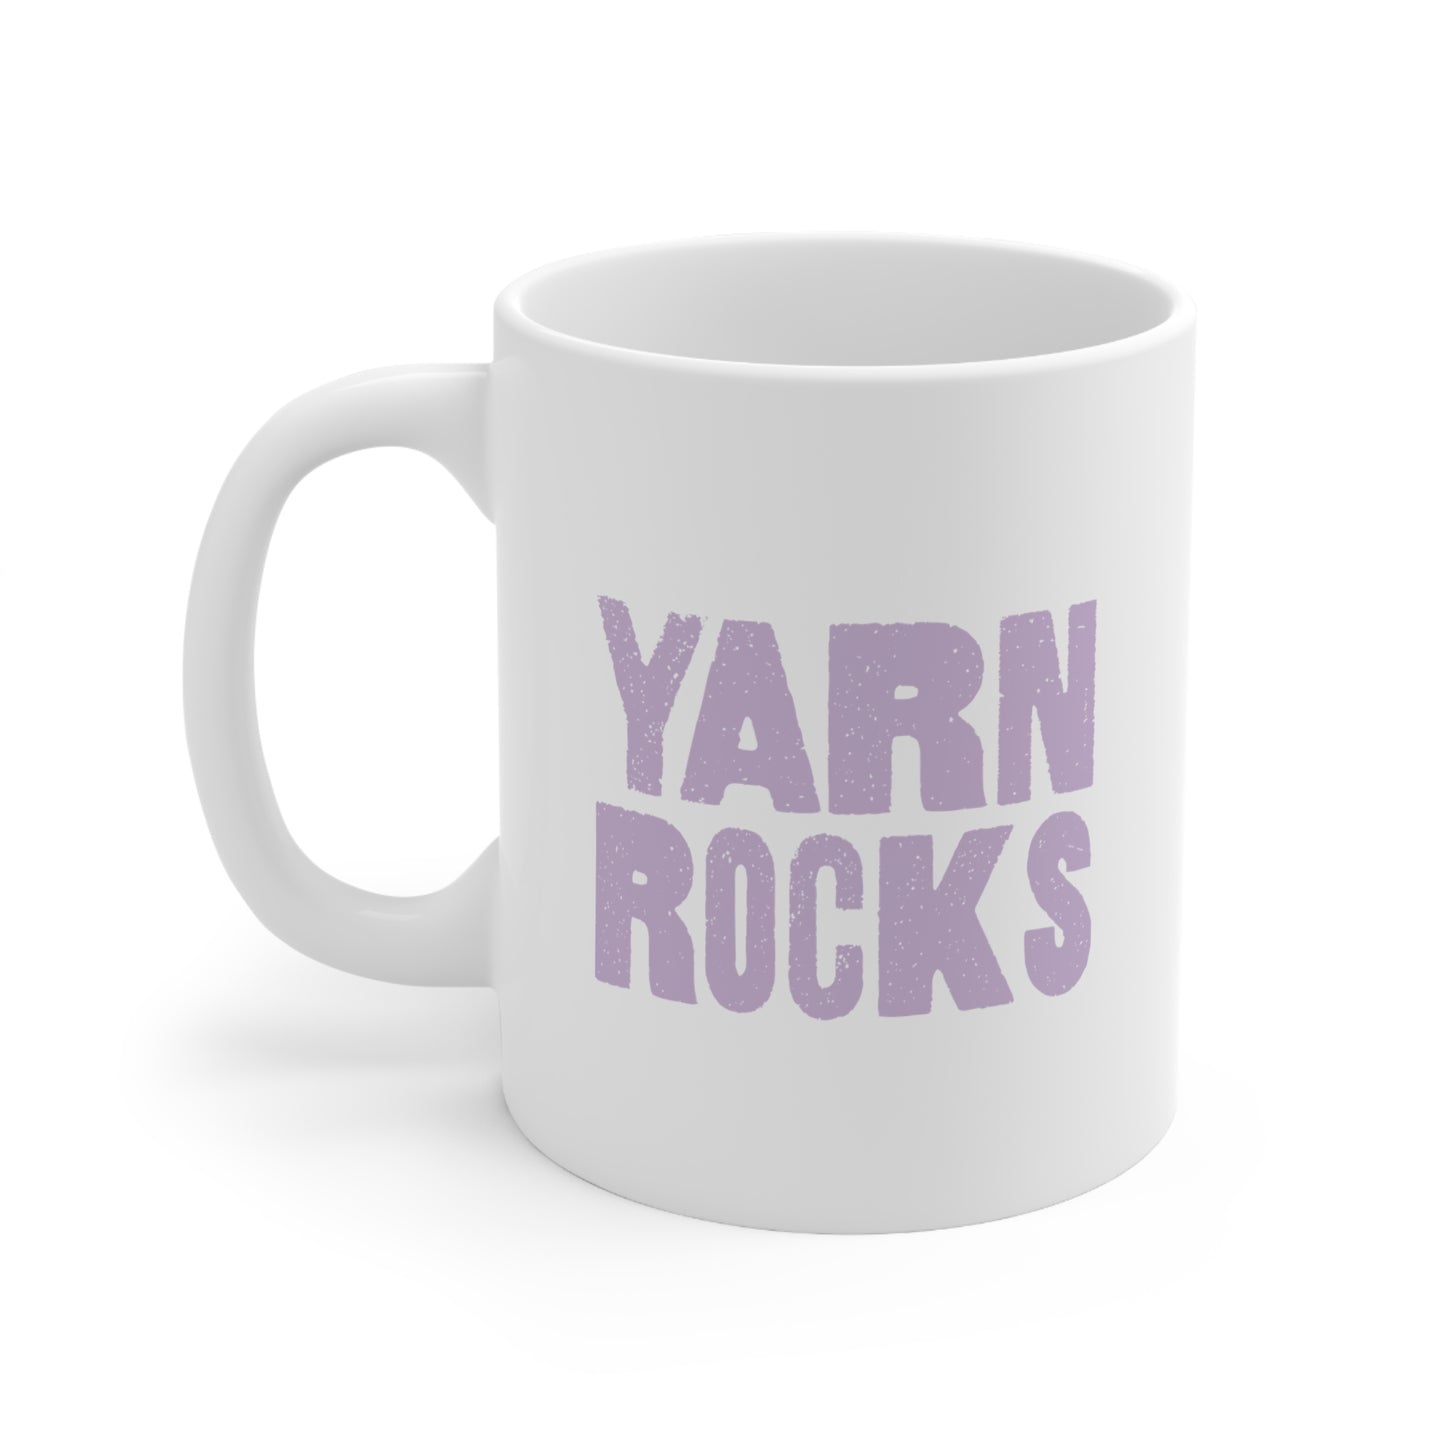 Yarn Rocks Ceramic Mugs - 11 or 15 oz